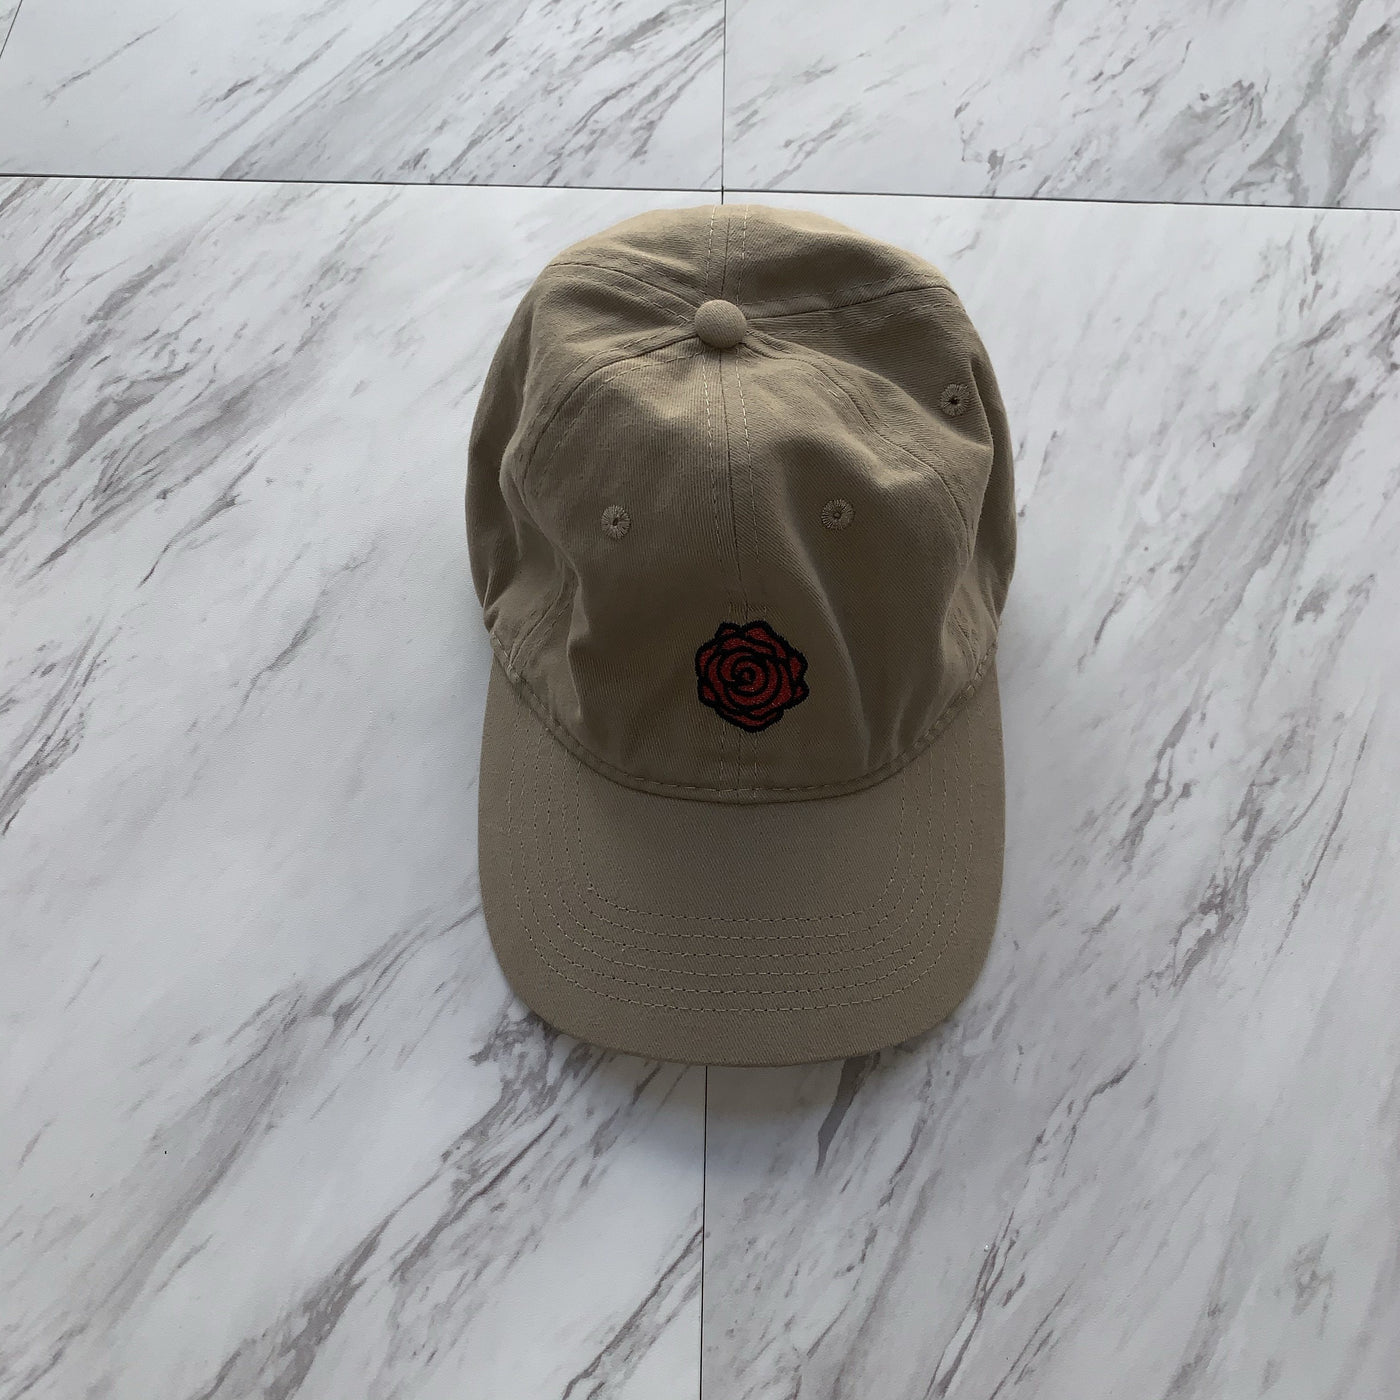 Pi Kappa Phi rose hat